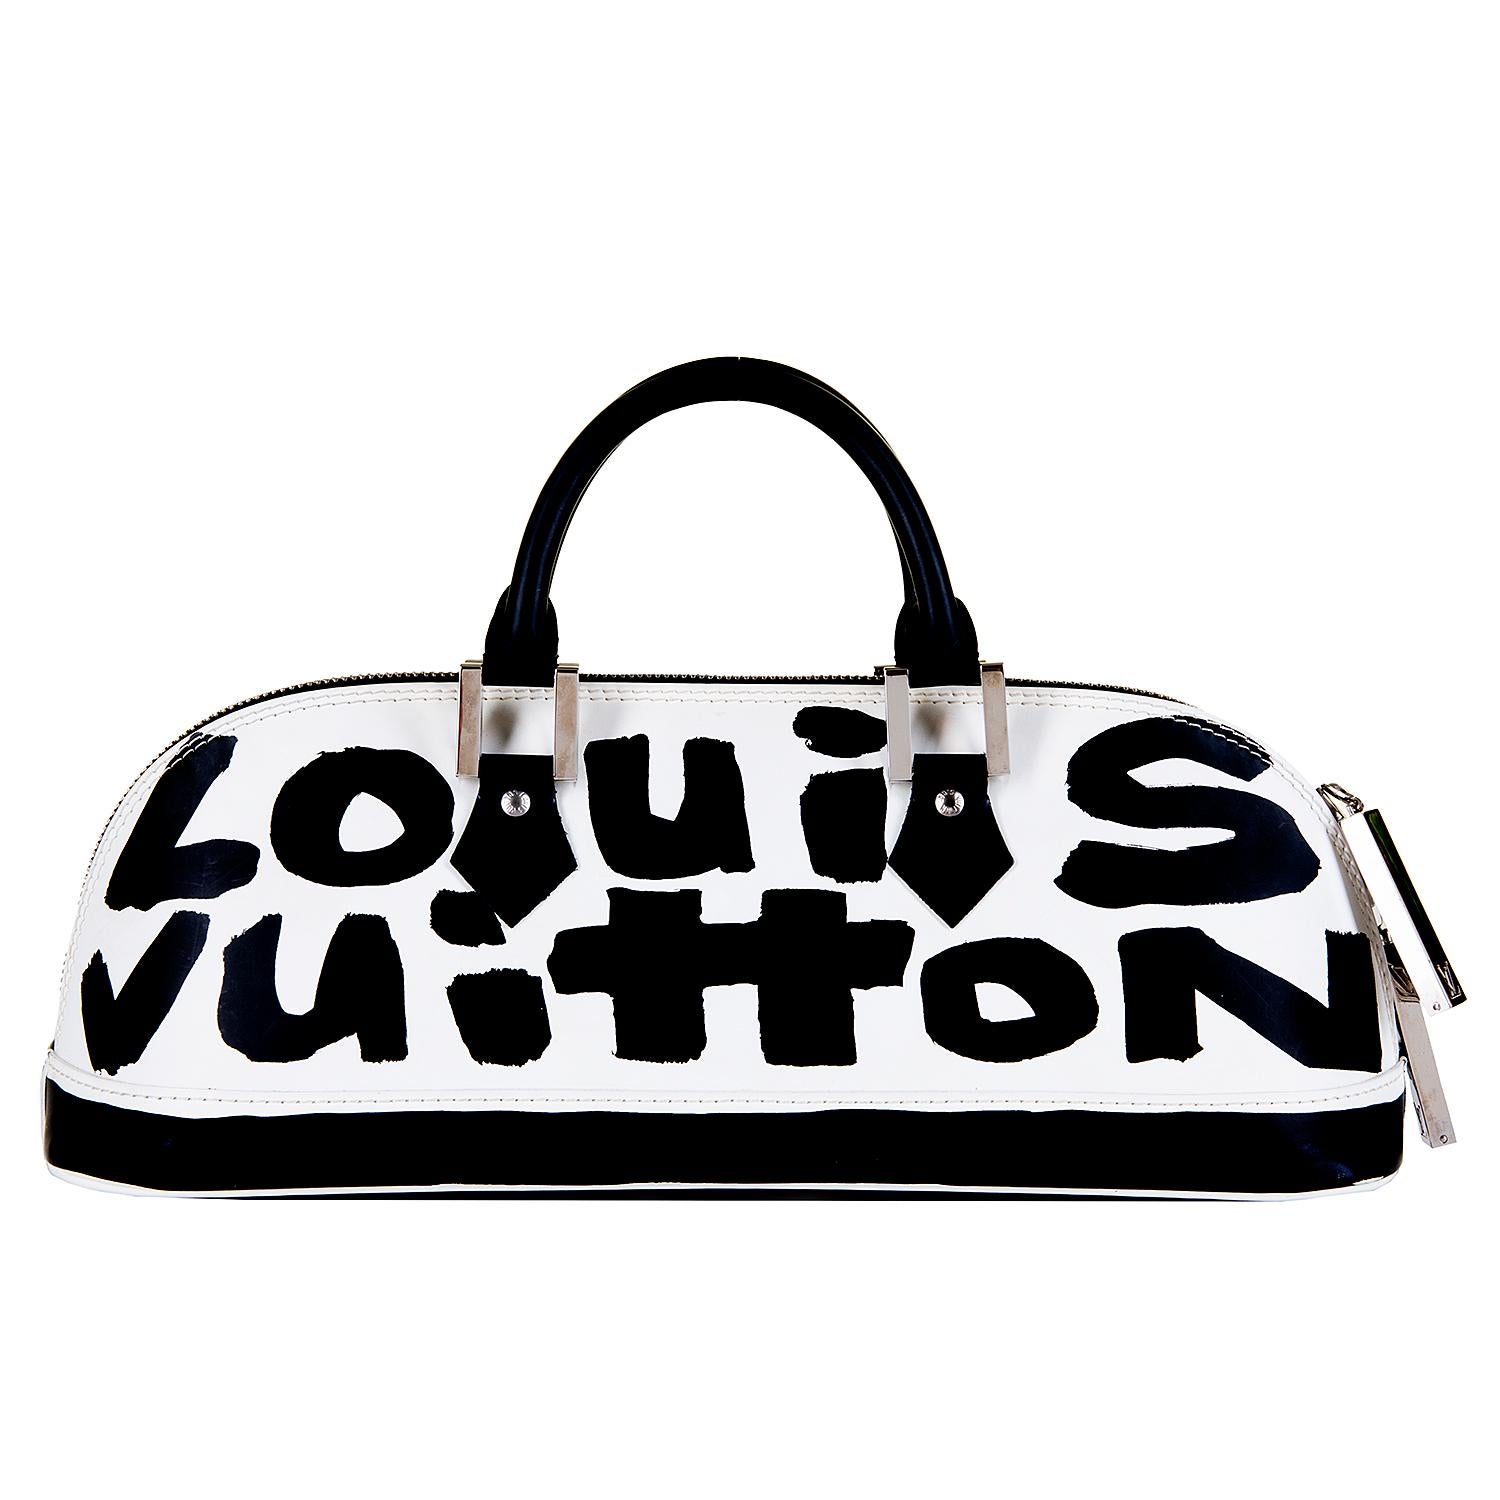 Rare Louis Vuitton Stephen Sprouse 'East/West' Alma Bag